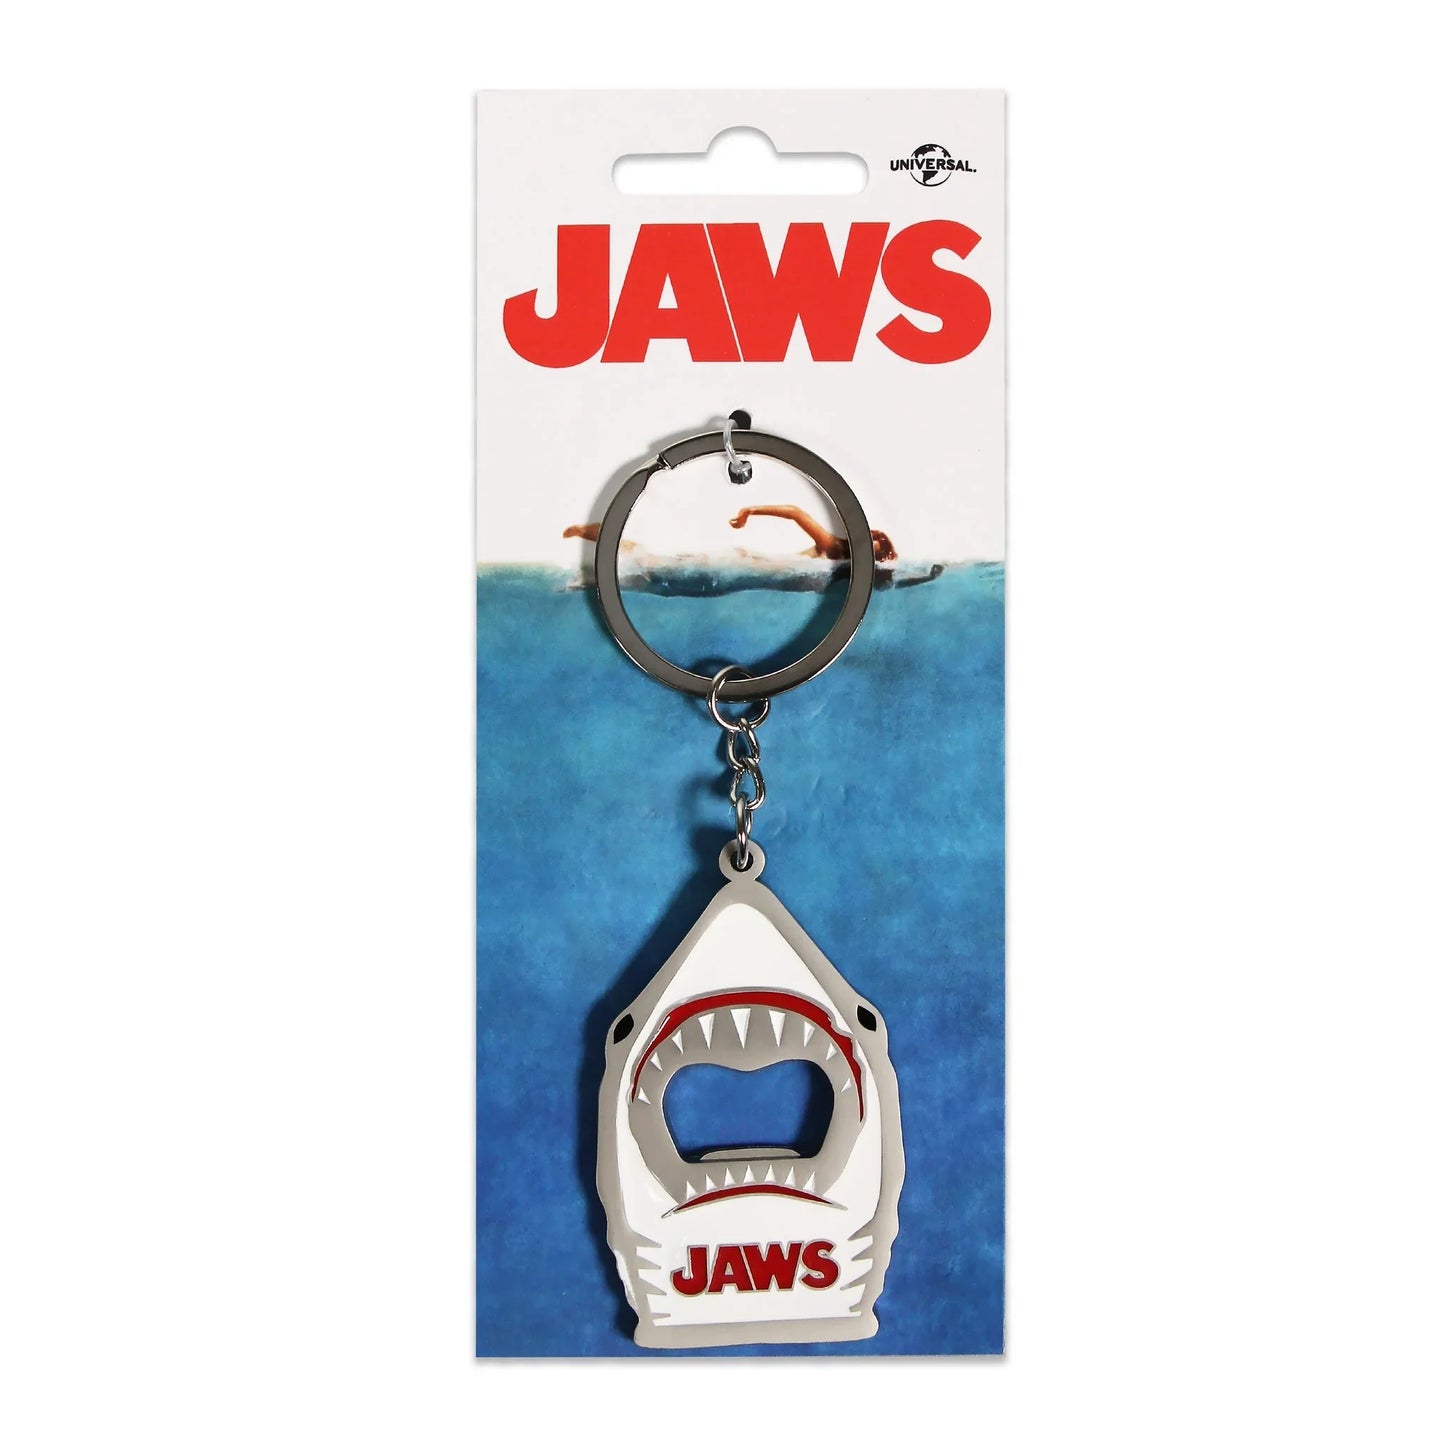 Jaws Bottle Opener Keychain